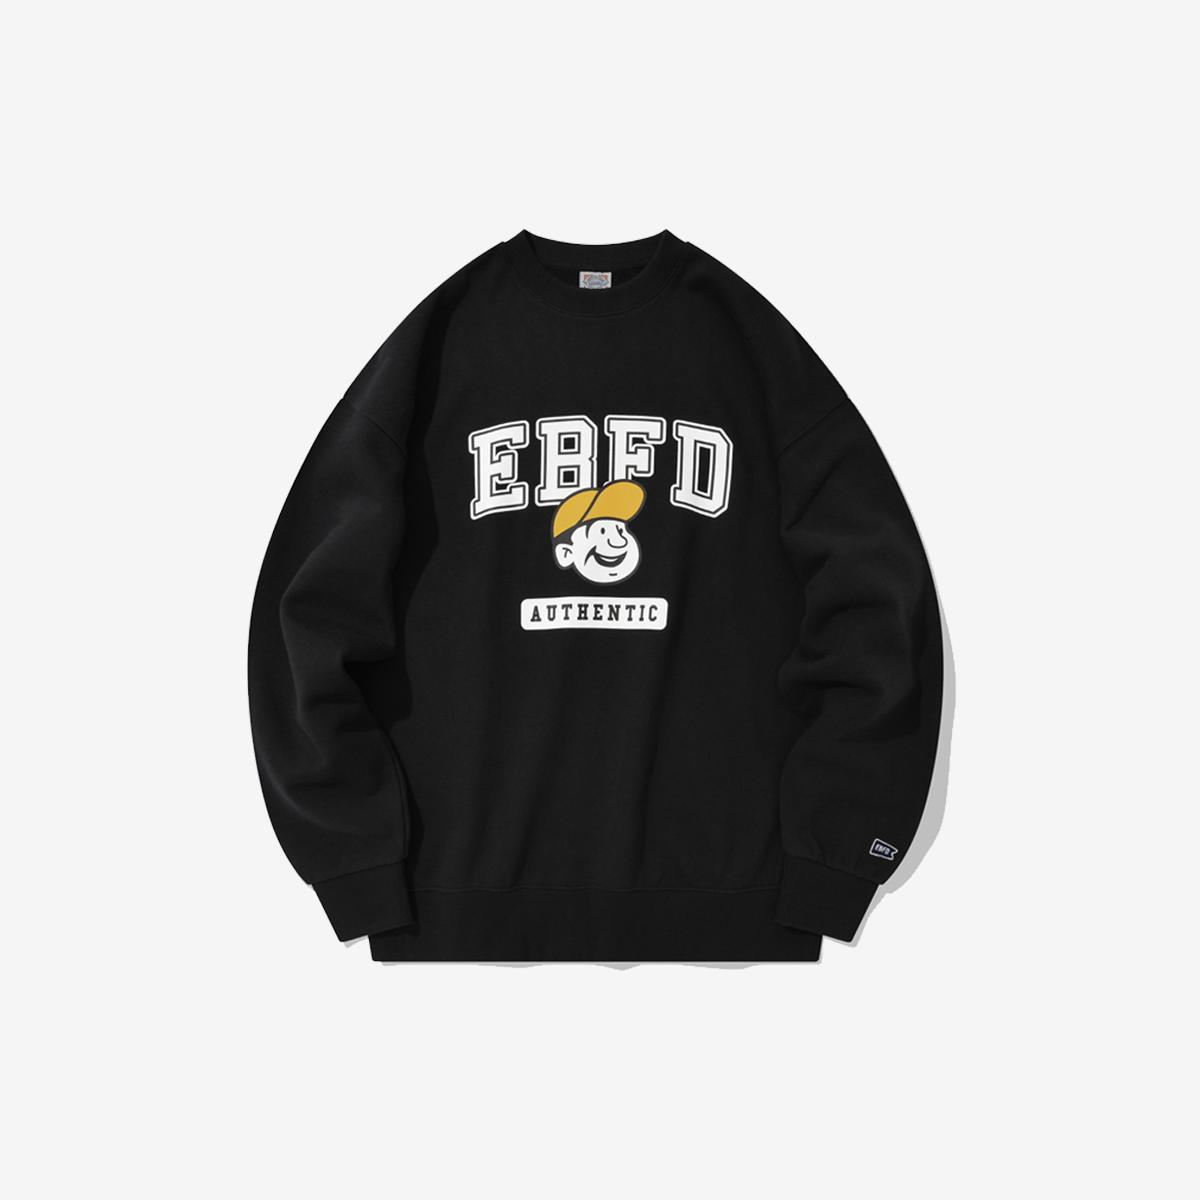 Betts Authentic Sweatshirt (Black)